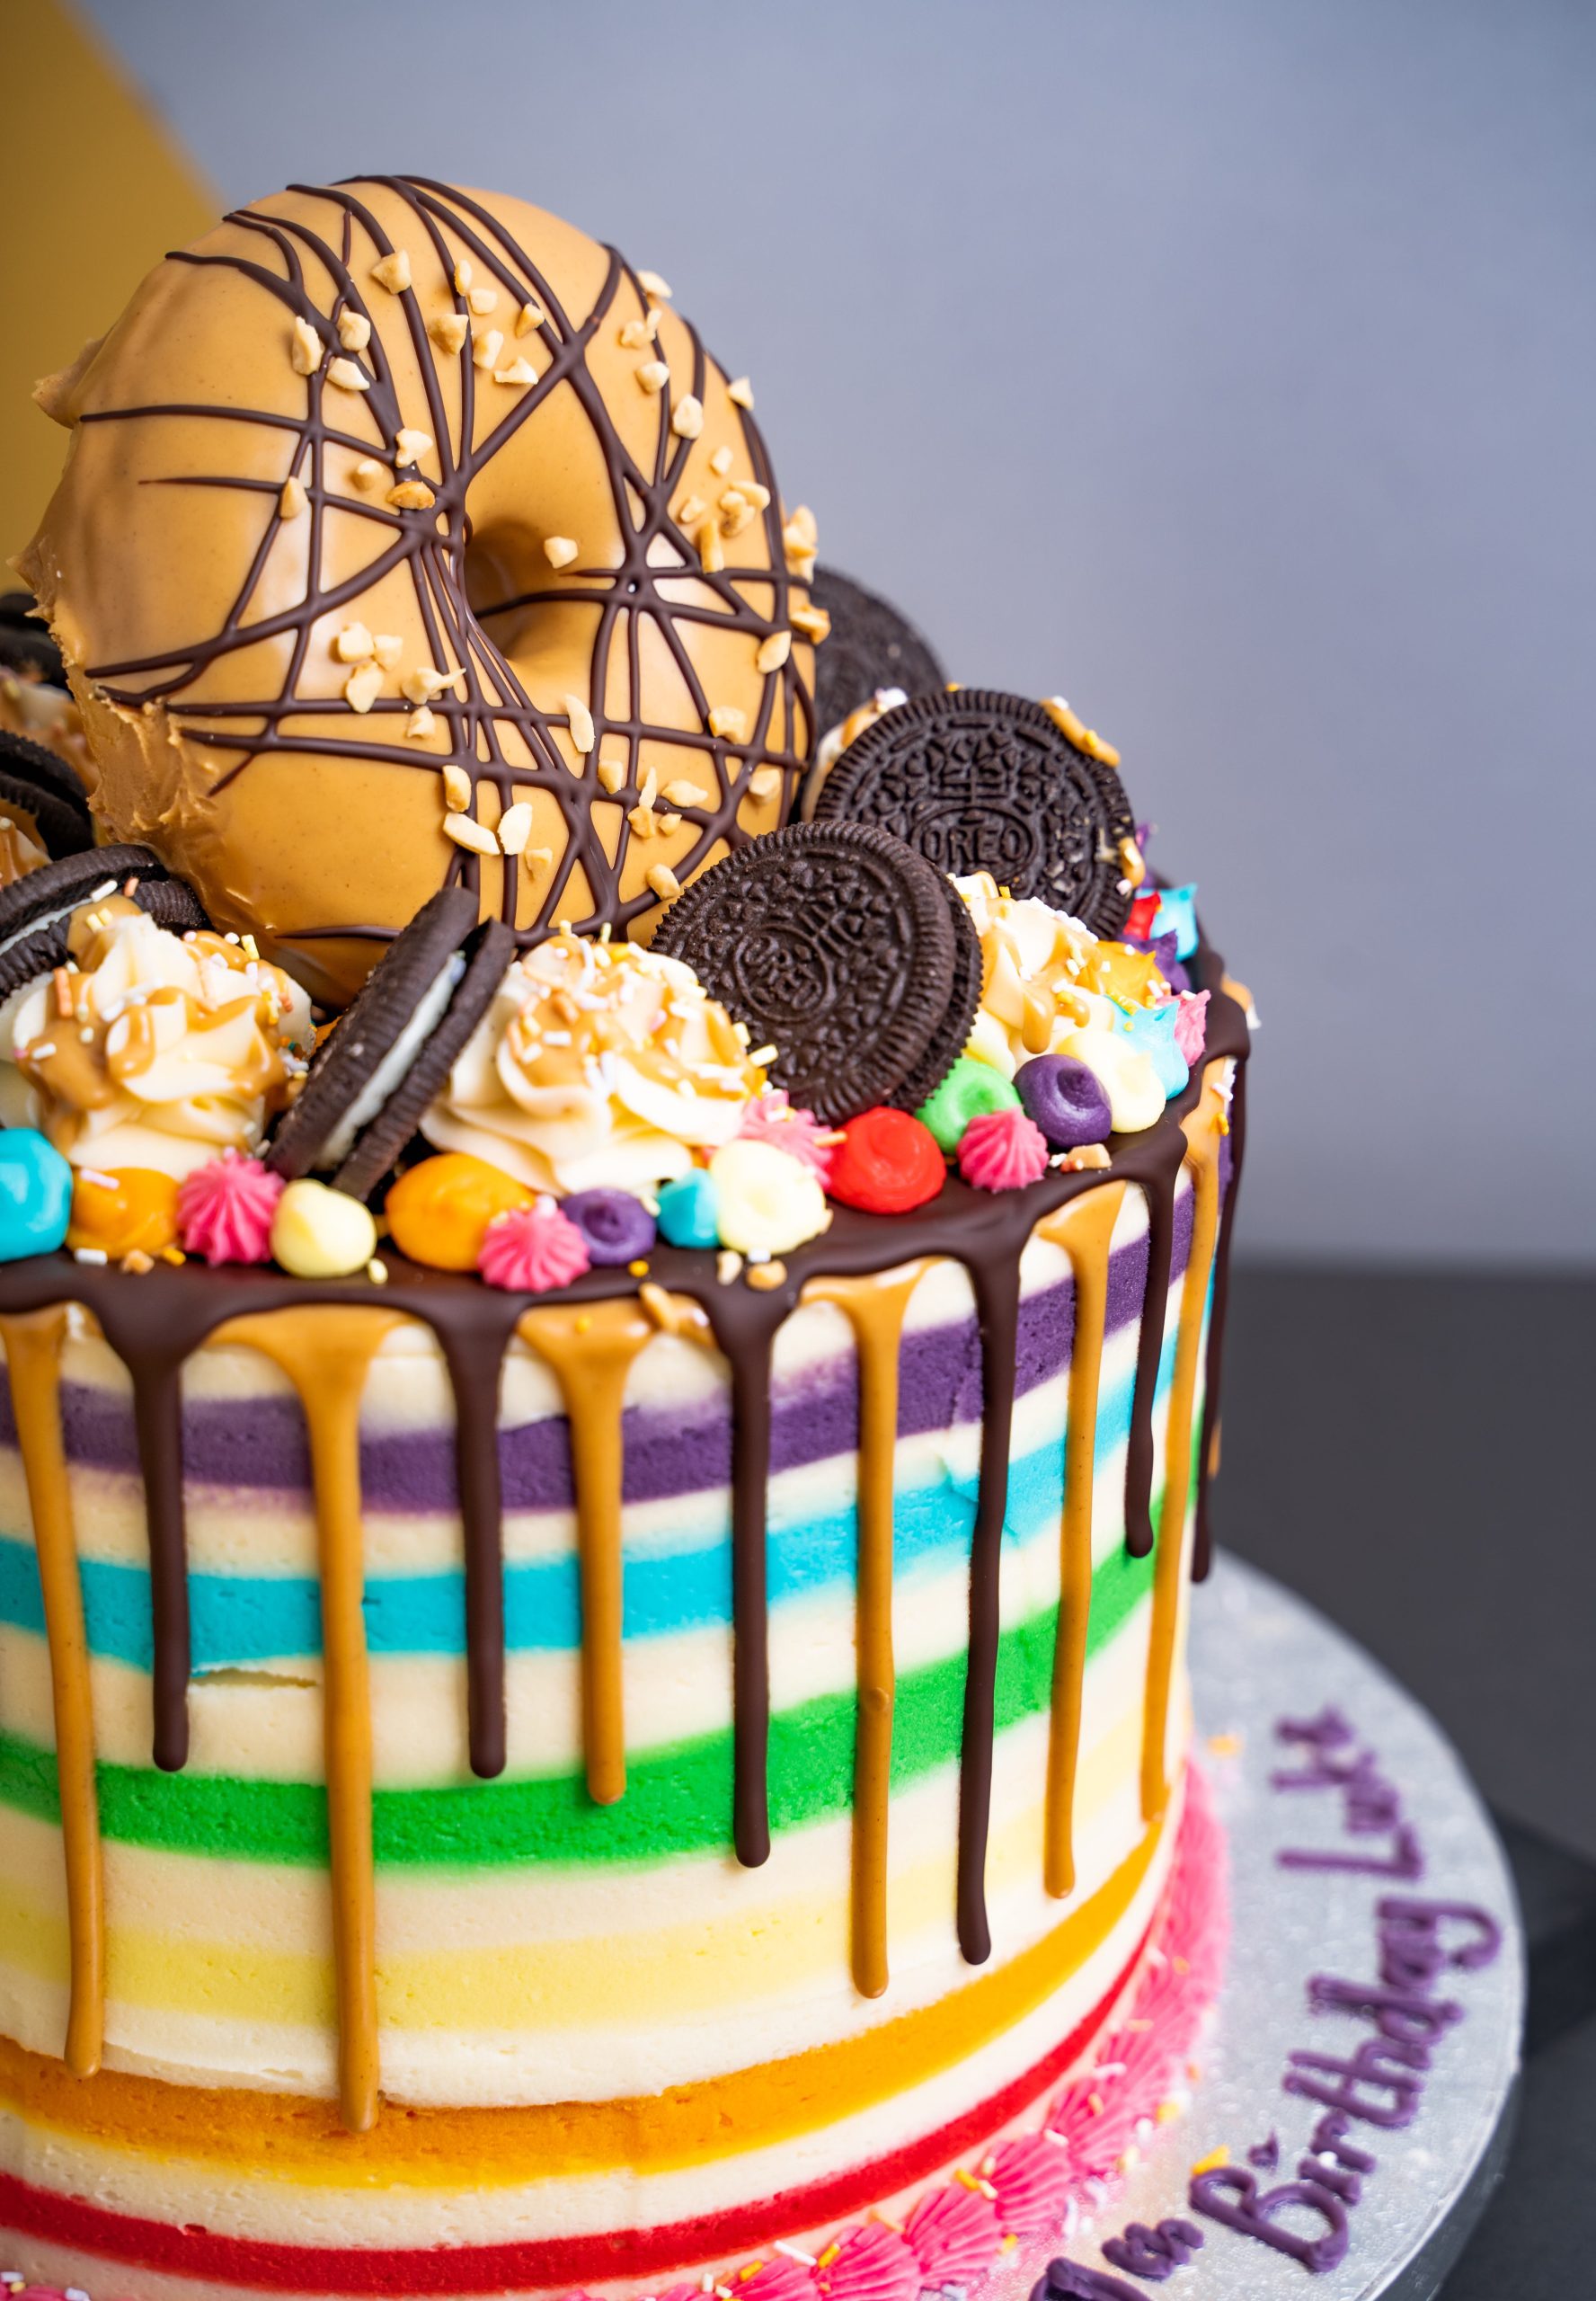 Mums Cakes London - Simple yet elegant cake🌸 #latepost #celebration #cake  #bespokecakes #londonbaker #londoncakemaker #familylove #elstreebaker  #cakeinspiration #mumsinbusiness #cakeblogger #wecreatecakes #instacake  #cakelover #handmadecake #cakegoals ...